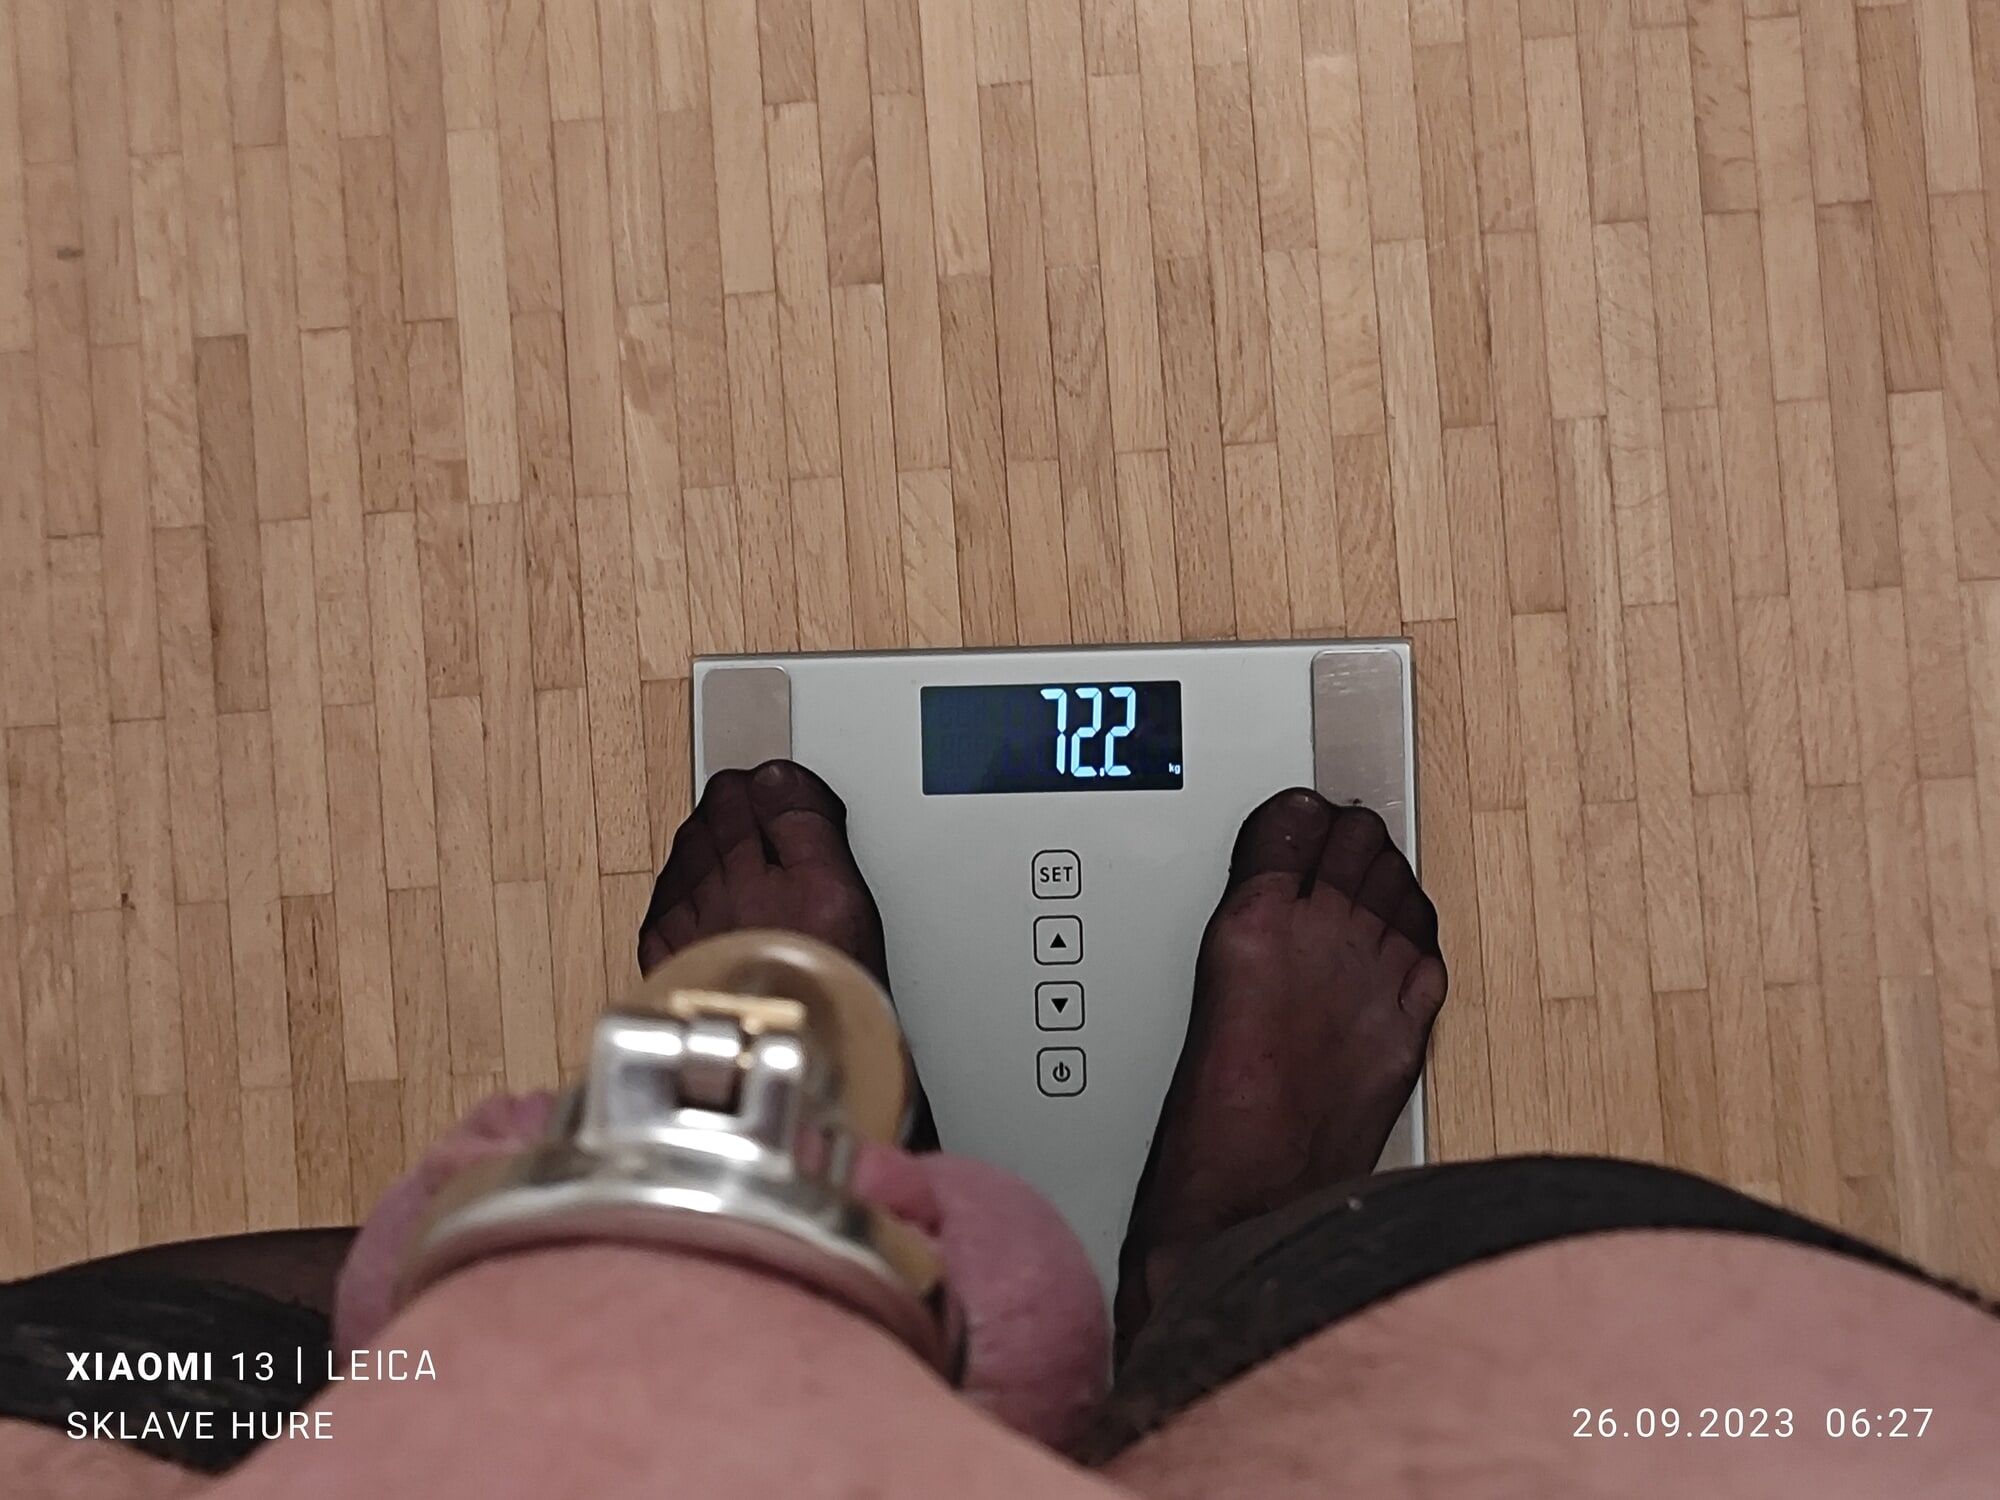 Weighing, Cagecheck, fucking, nylons September 26, 2023